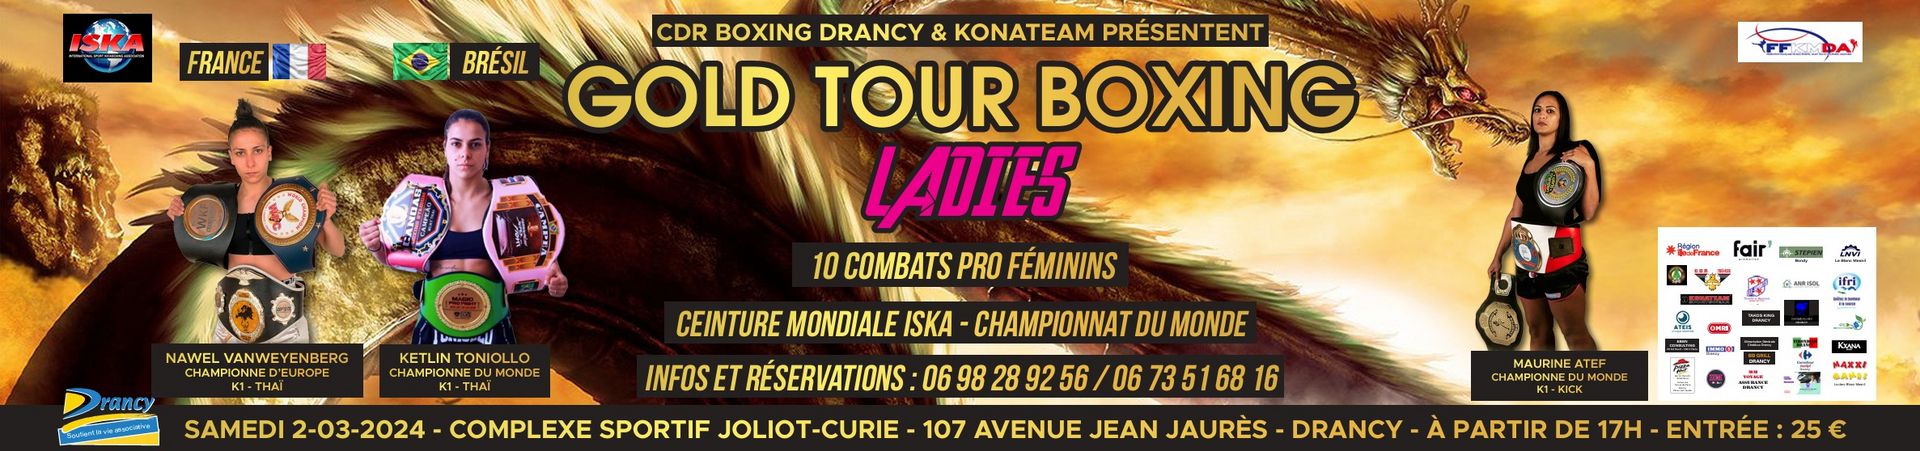 CDR  BOXING DRANCY & KONATEAM presents GOLD TOUR BOXING LADIES Championship & ISKA World Champion Kickboxing  2024